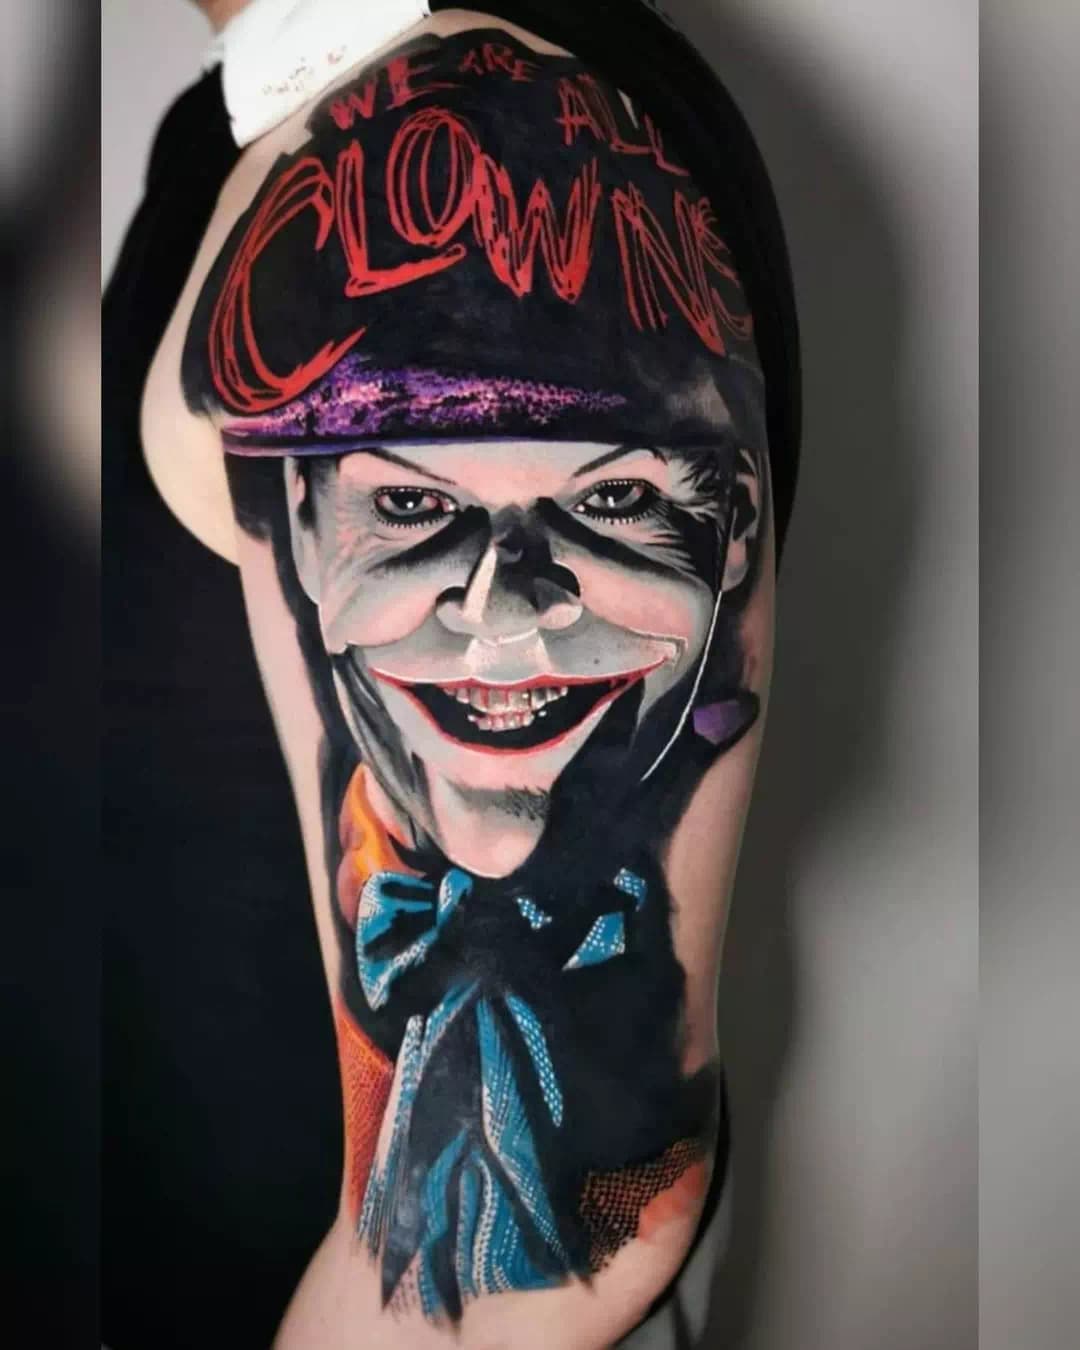 Tatuaje de la cara del Joker sobre el brazo con tinta roja